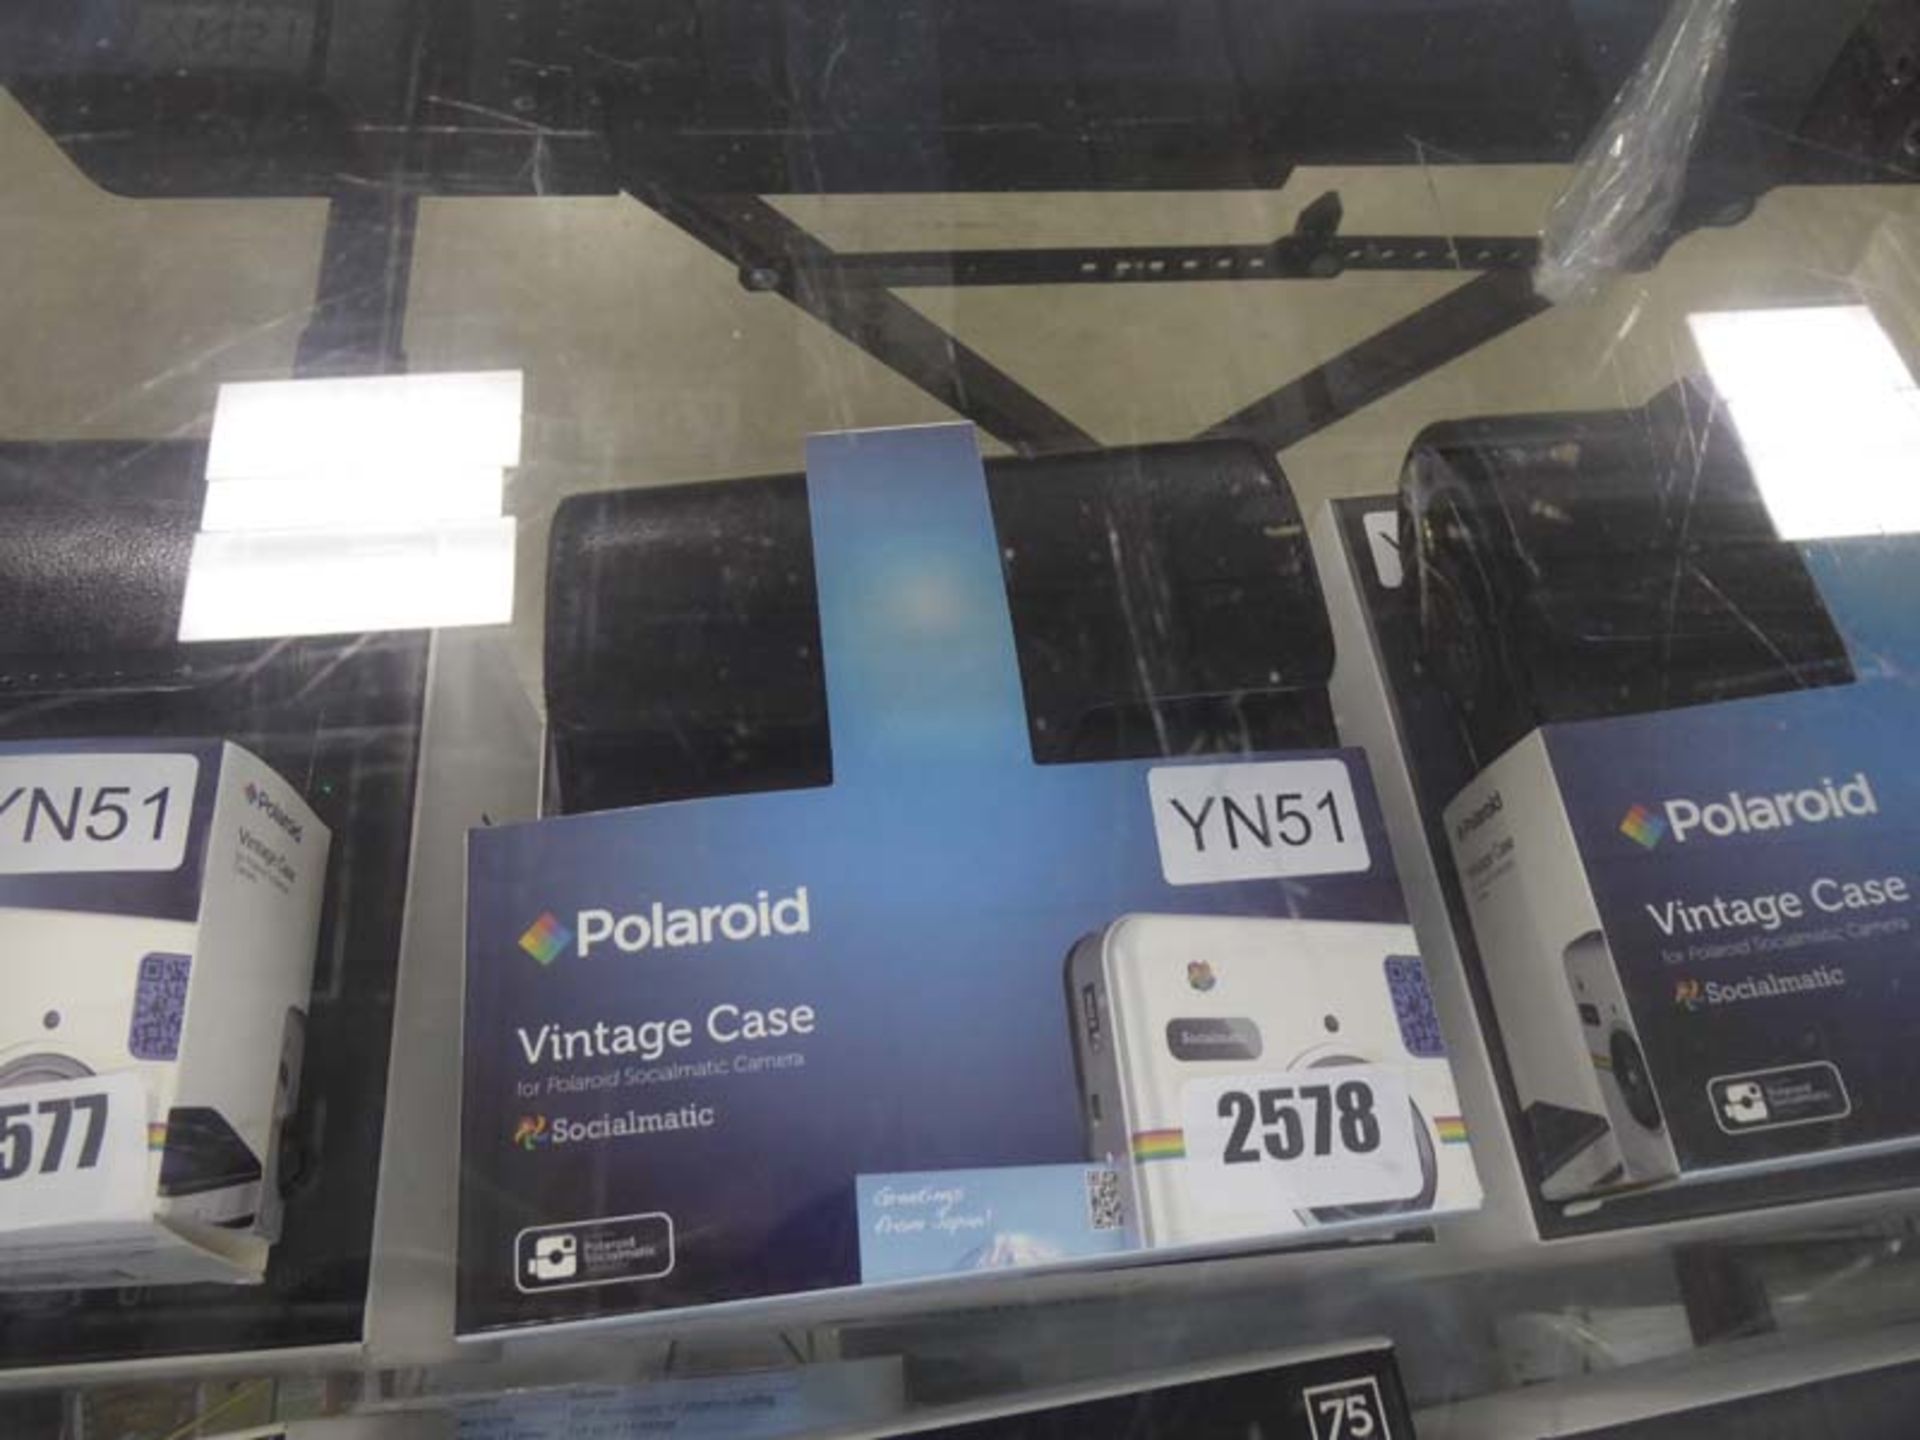 Polaroid Sociomatic camera in box with vintage case accessory